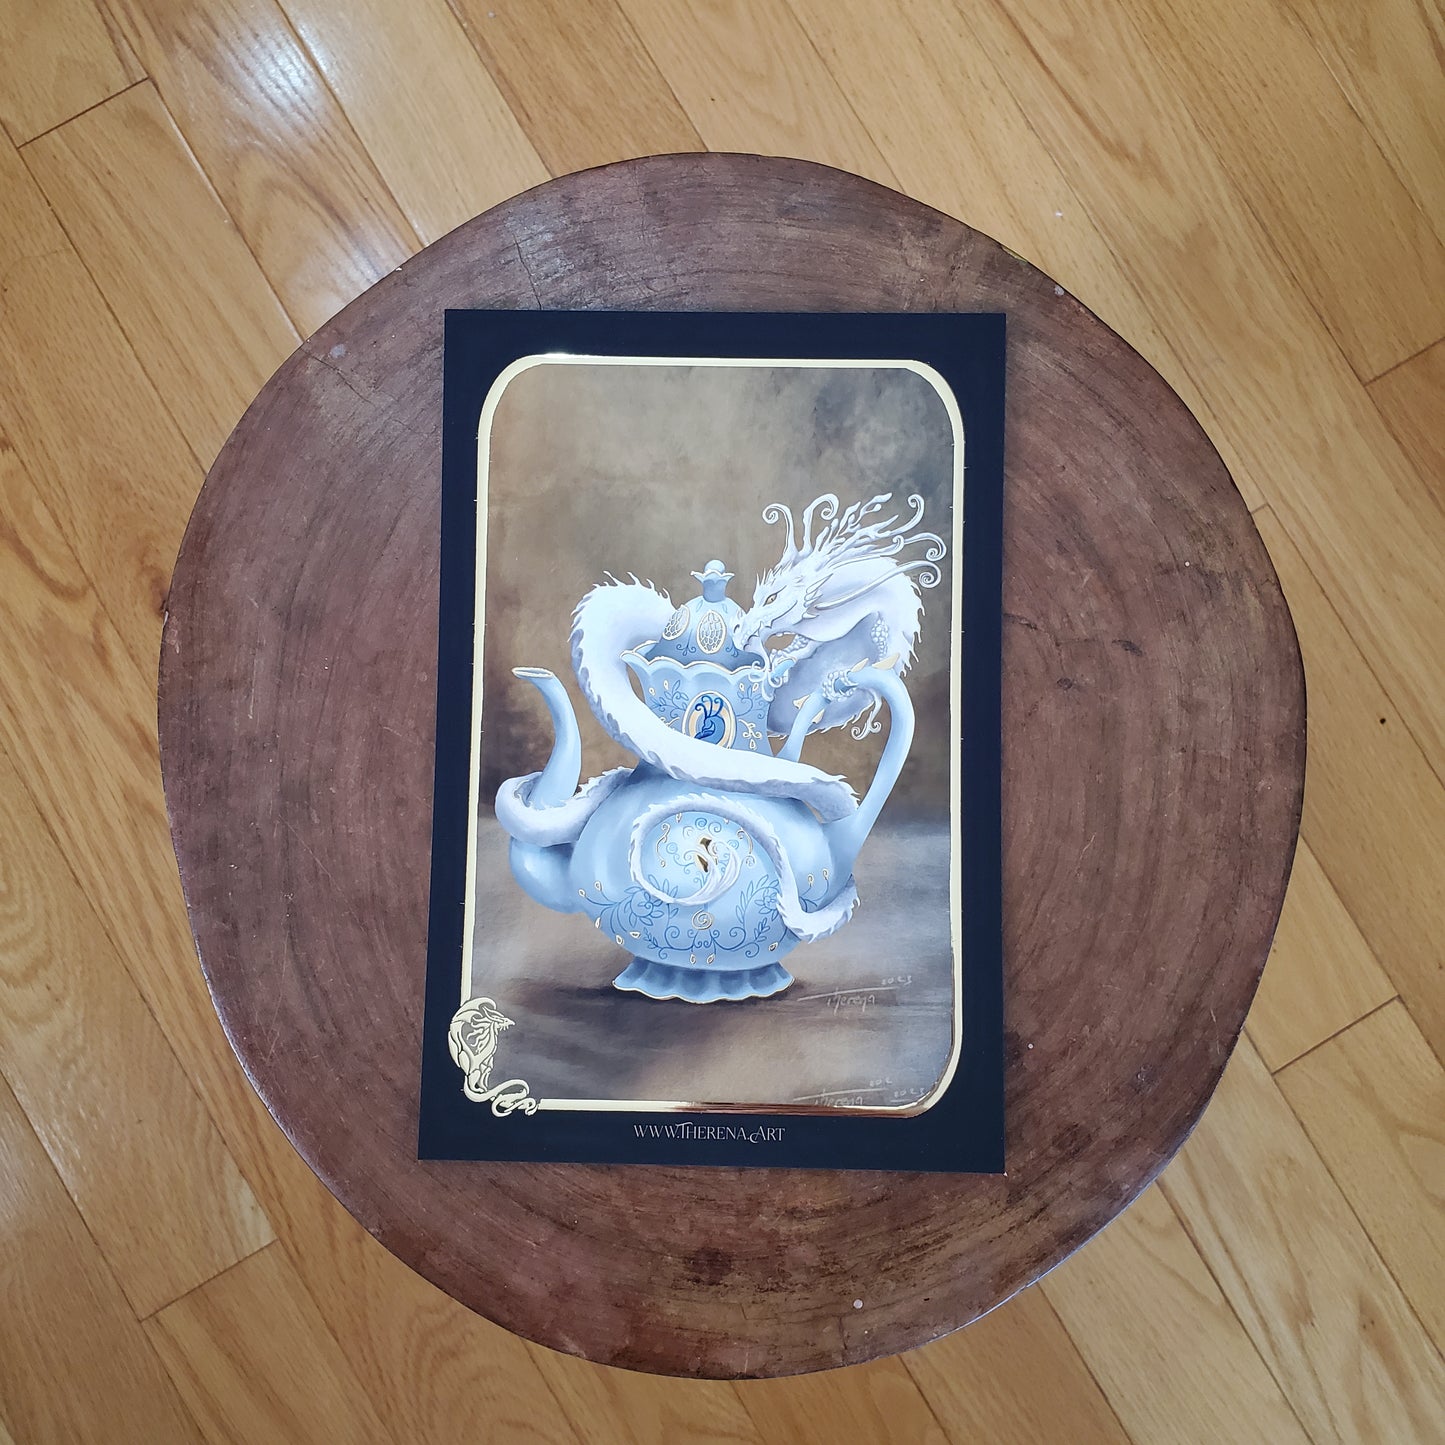 Gold Foil Tea Dragon Print (limited edition/signed)